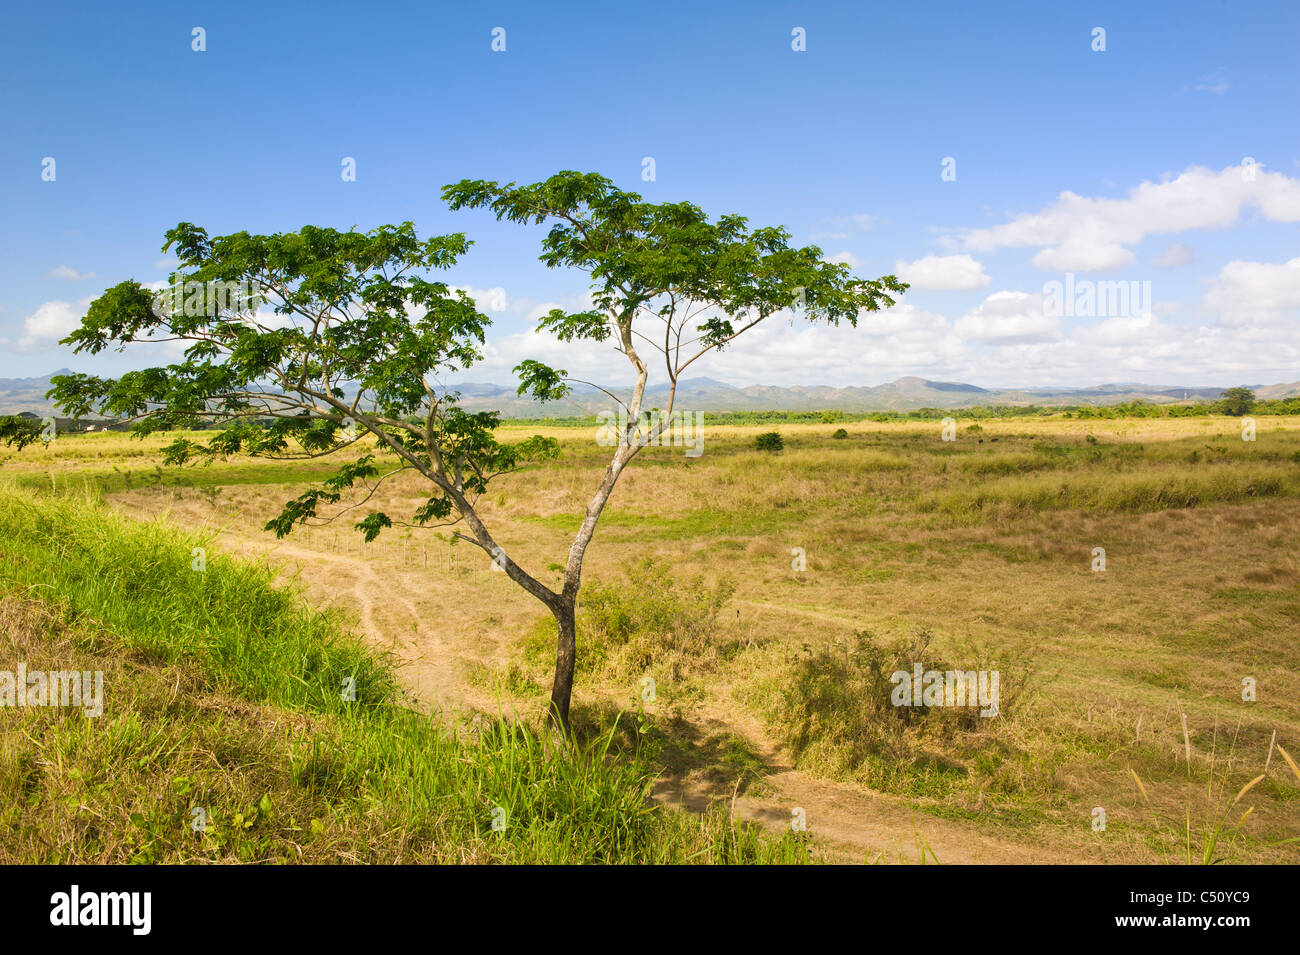 Landschaft der Valle de los Ingenios, Tal der Zuckerfabriken, Trinidad, Kuba Stockfoto